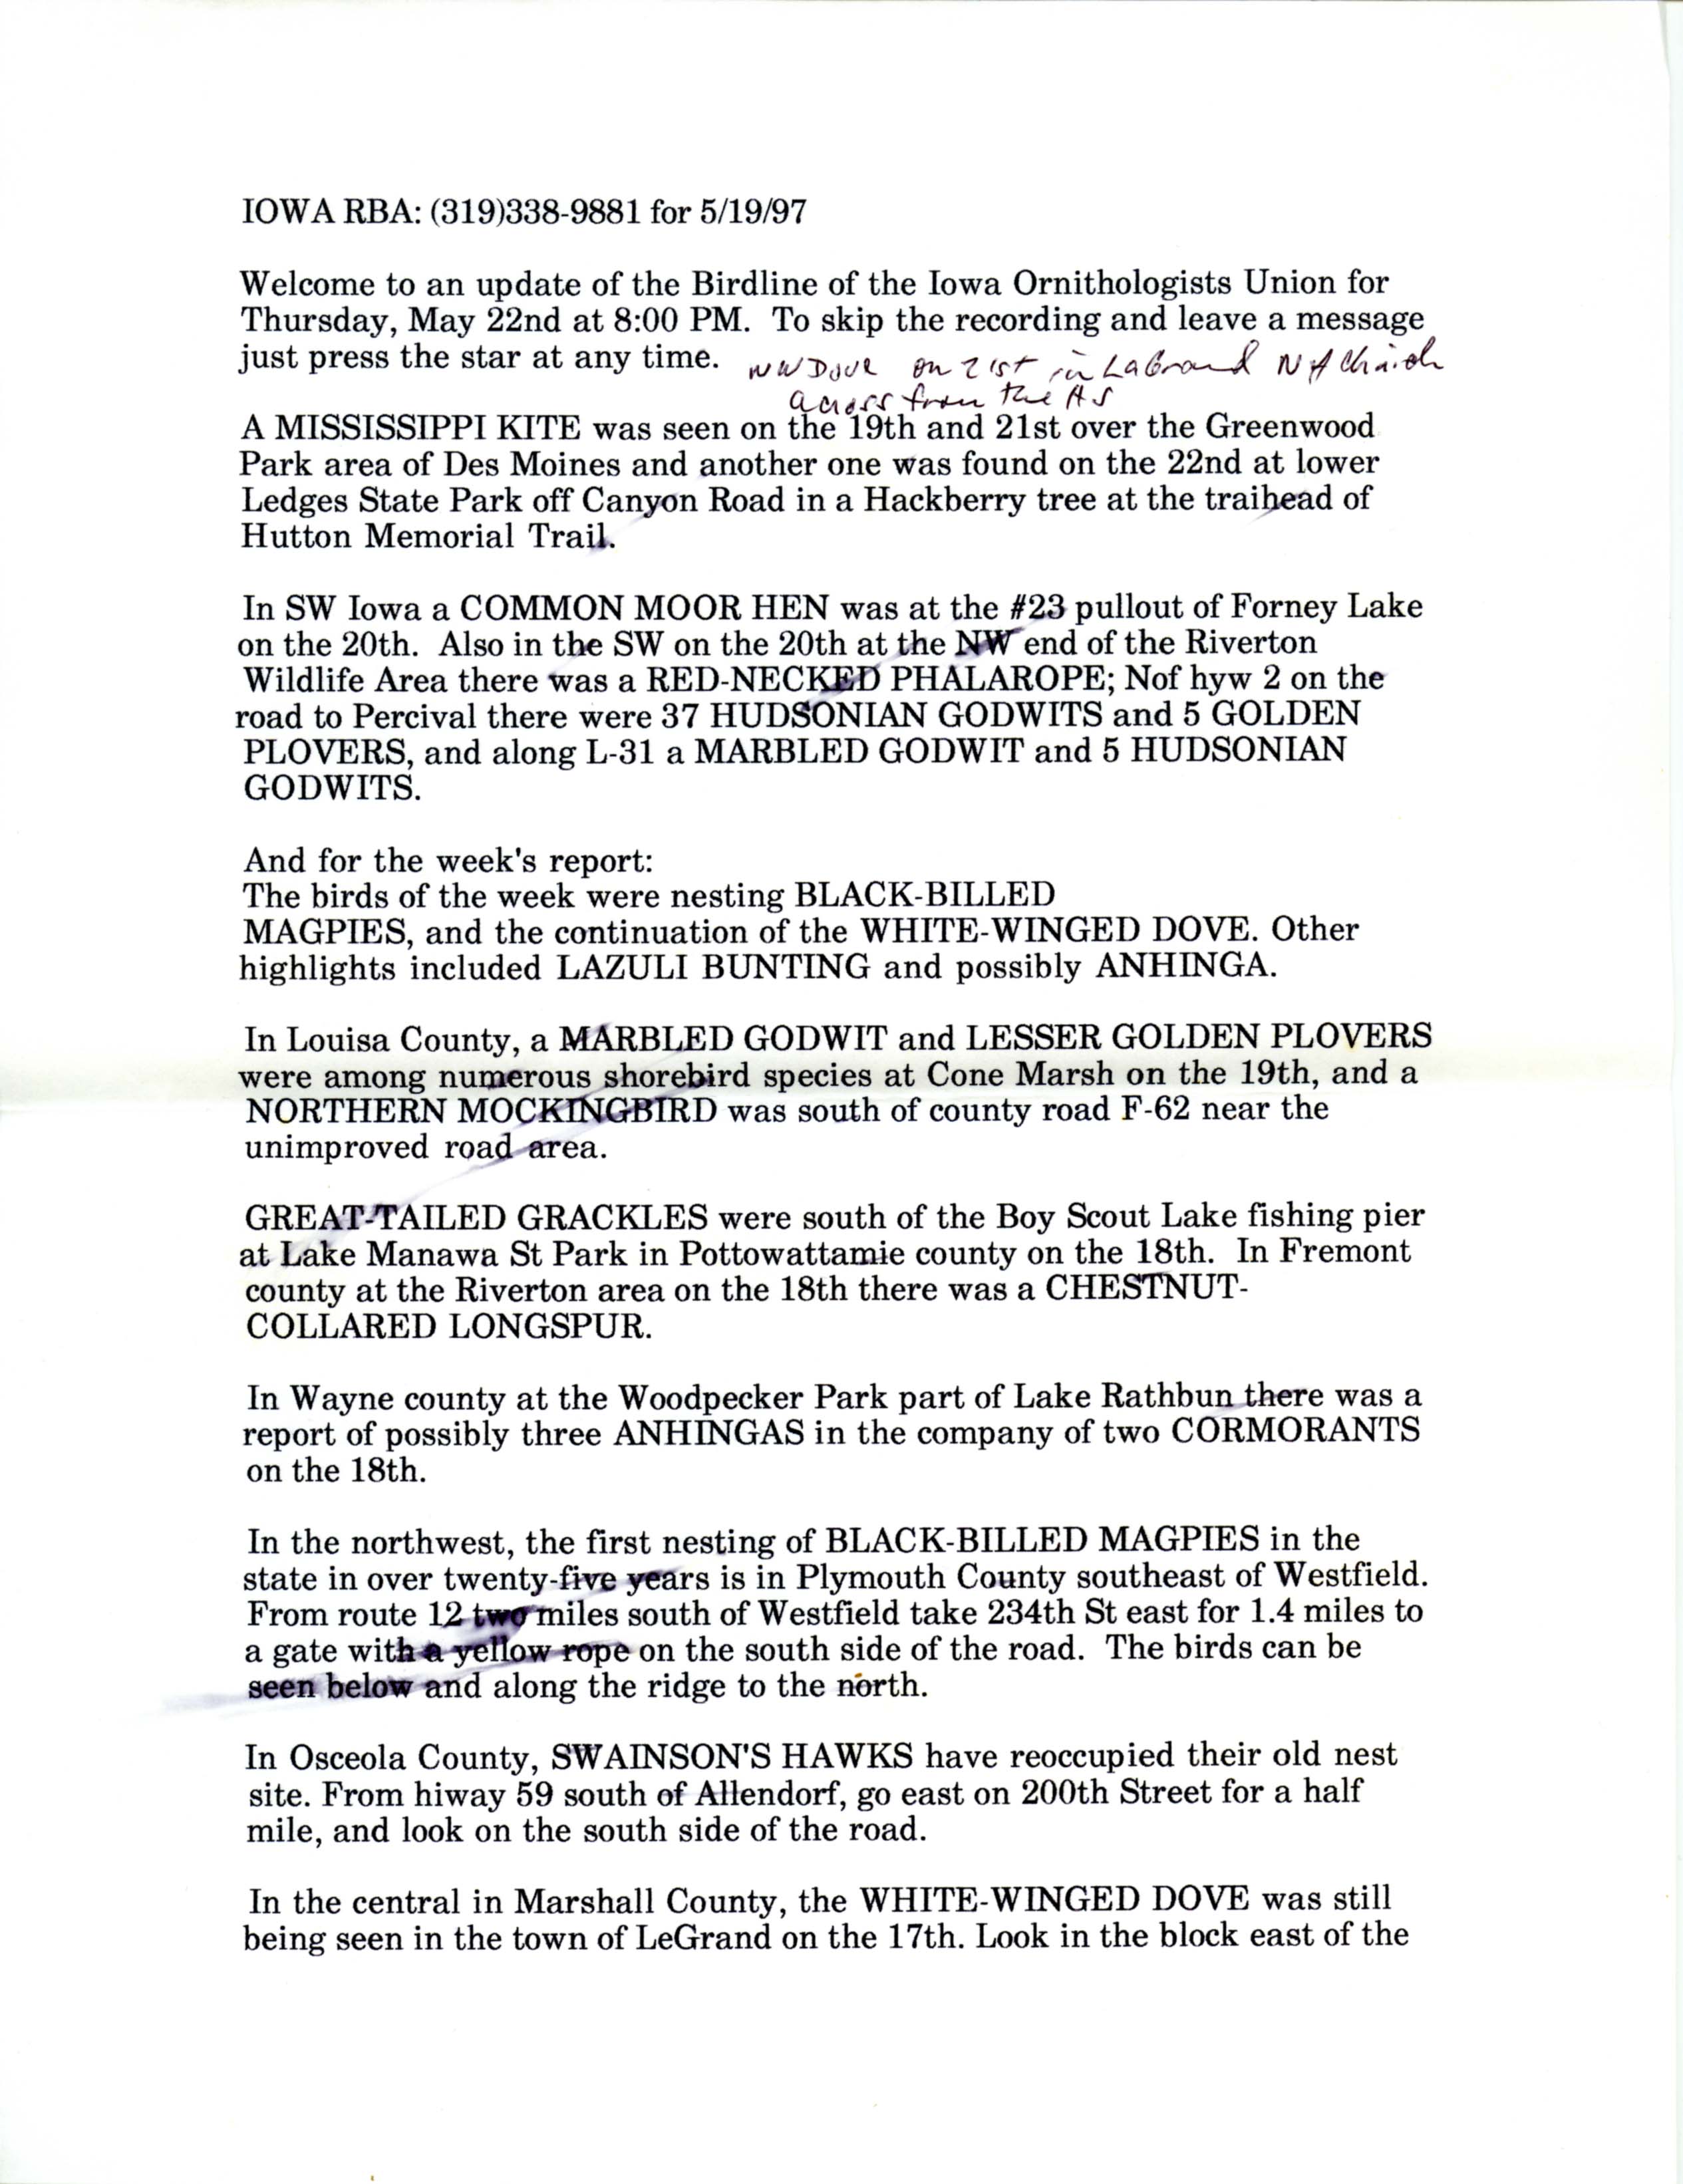 Iowa RBA and update, May 19-22, 1997